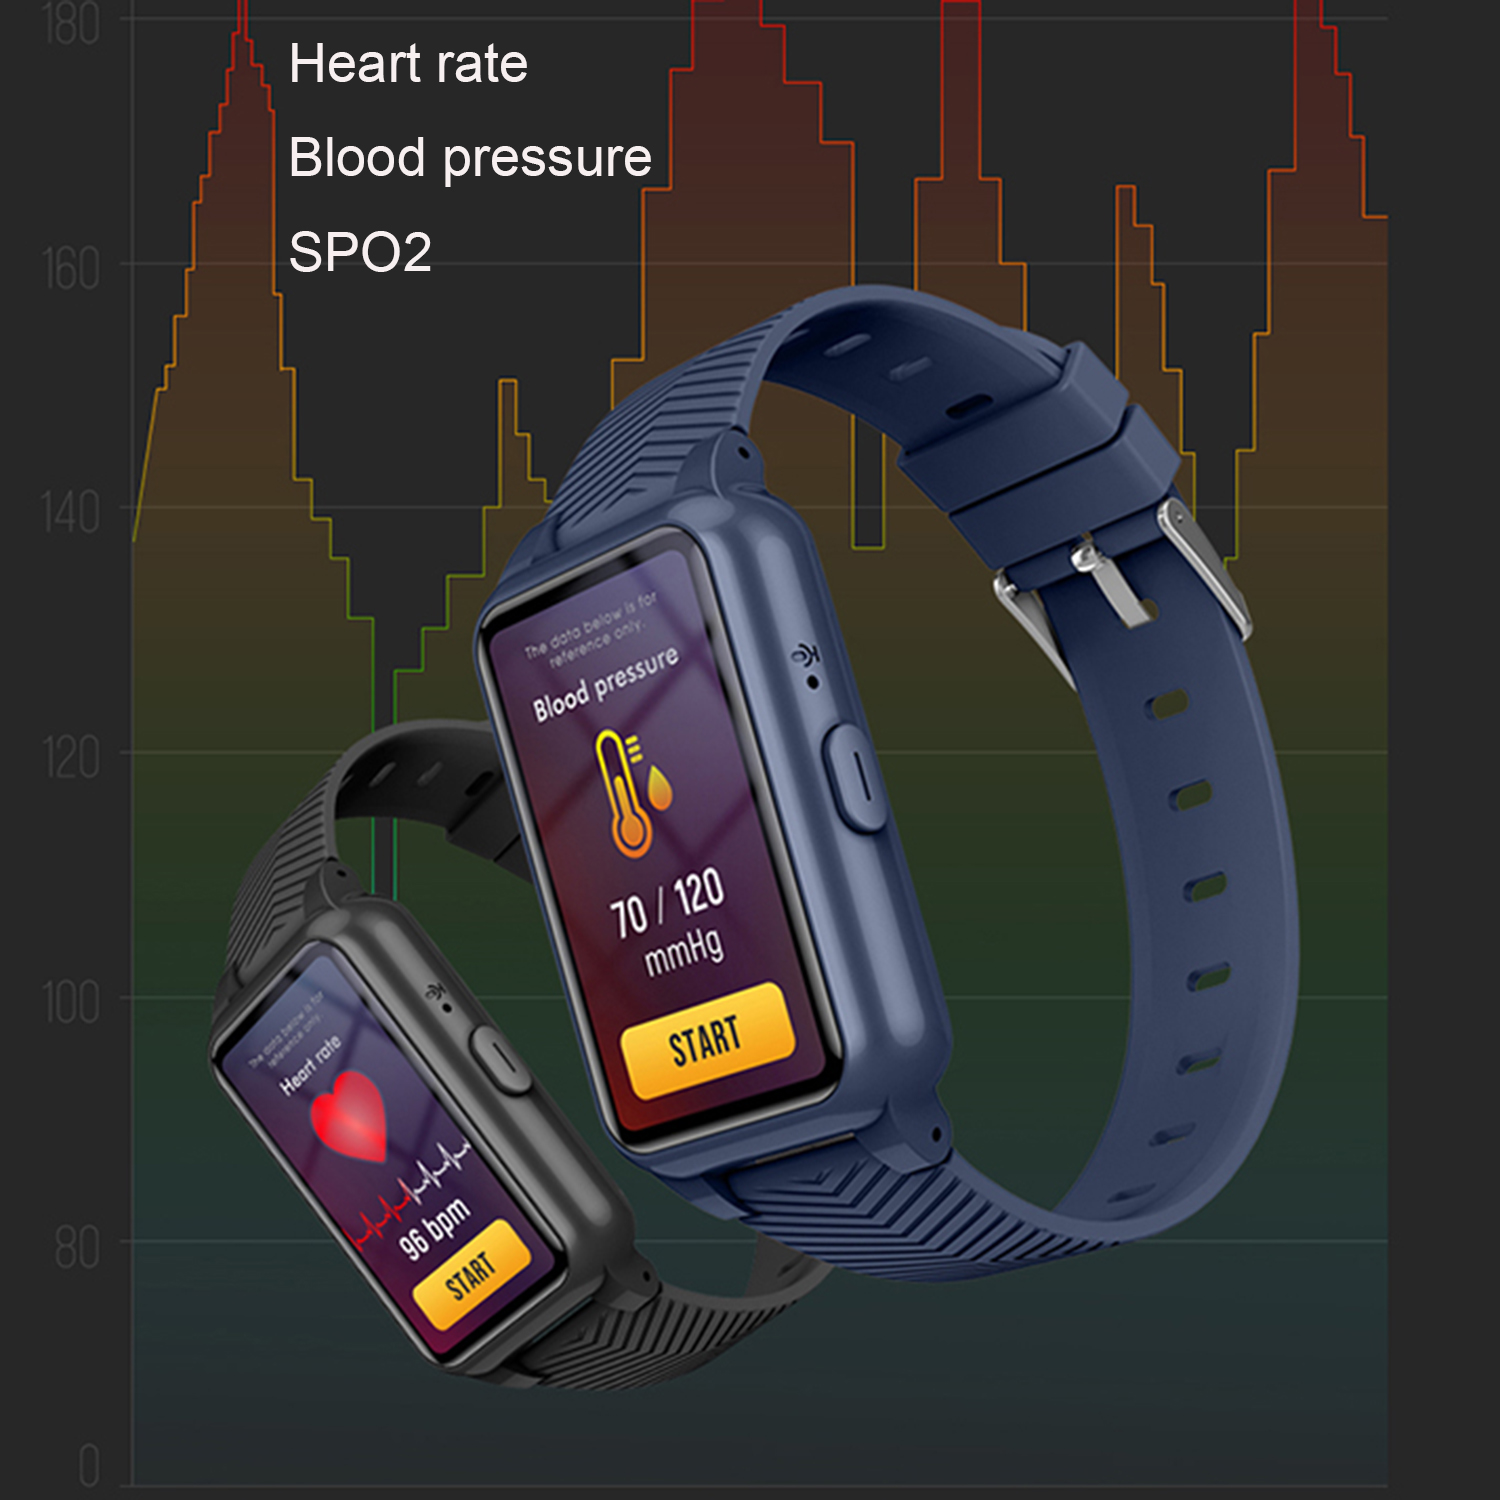 Slim Design 4G Elderly GPS Tracker Watch with Body Temperature Y46